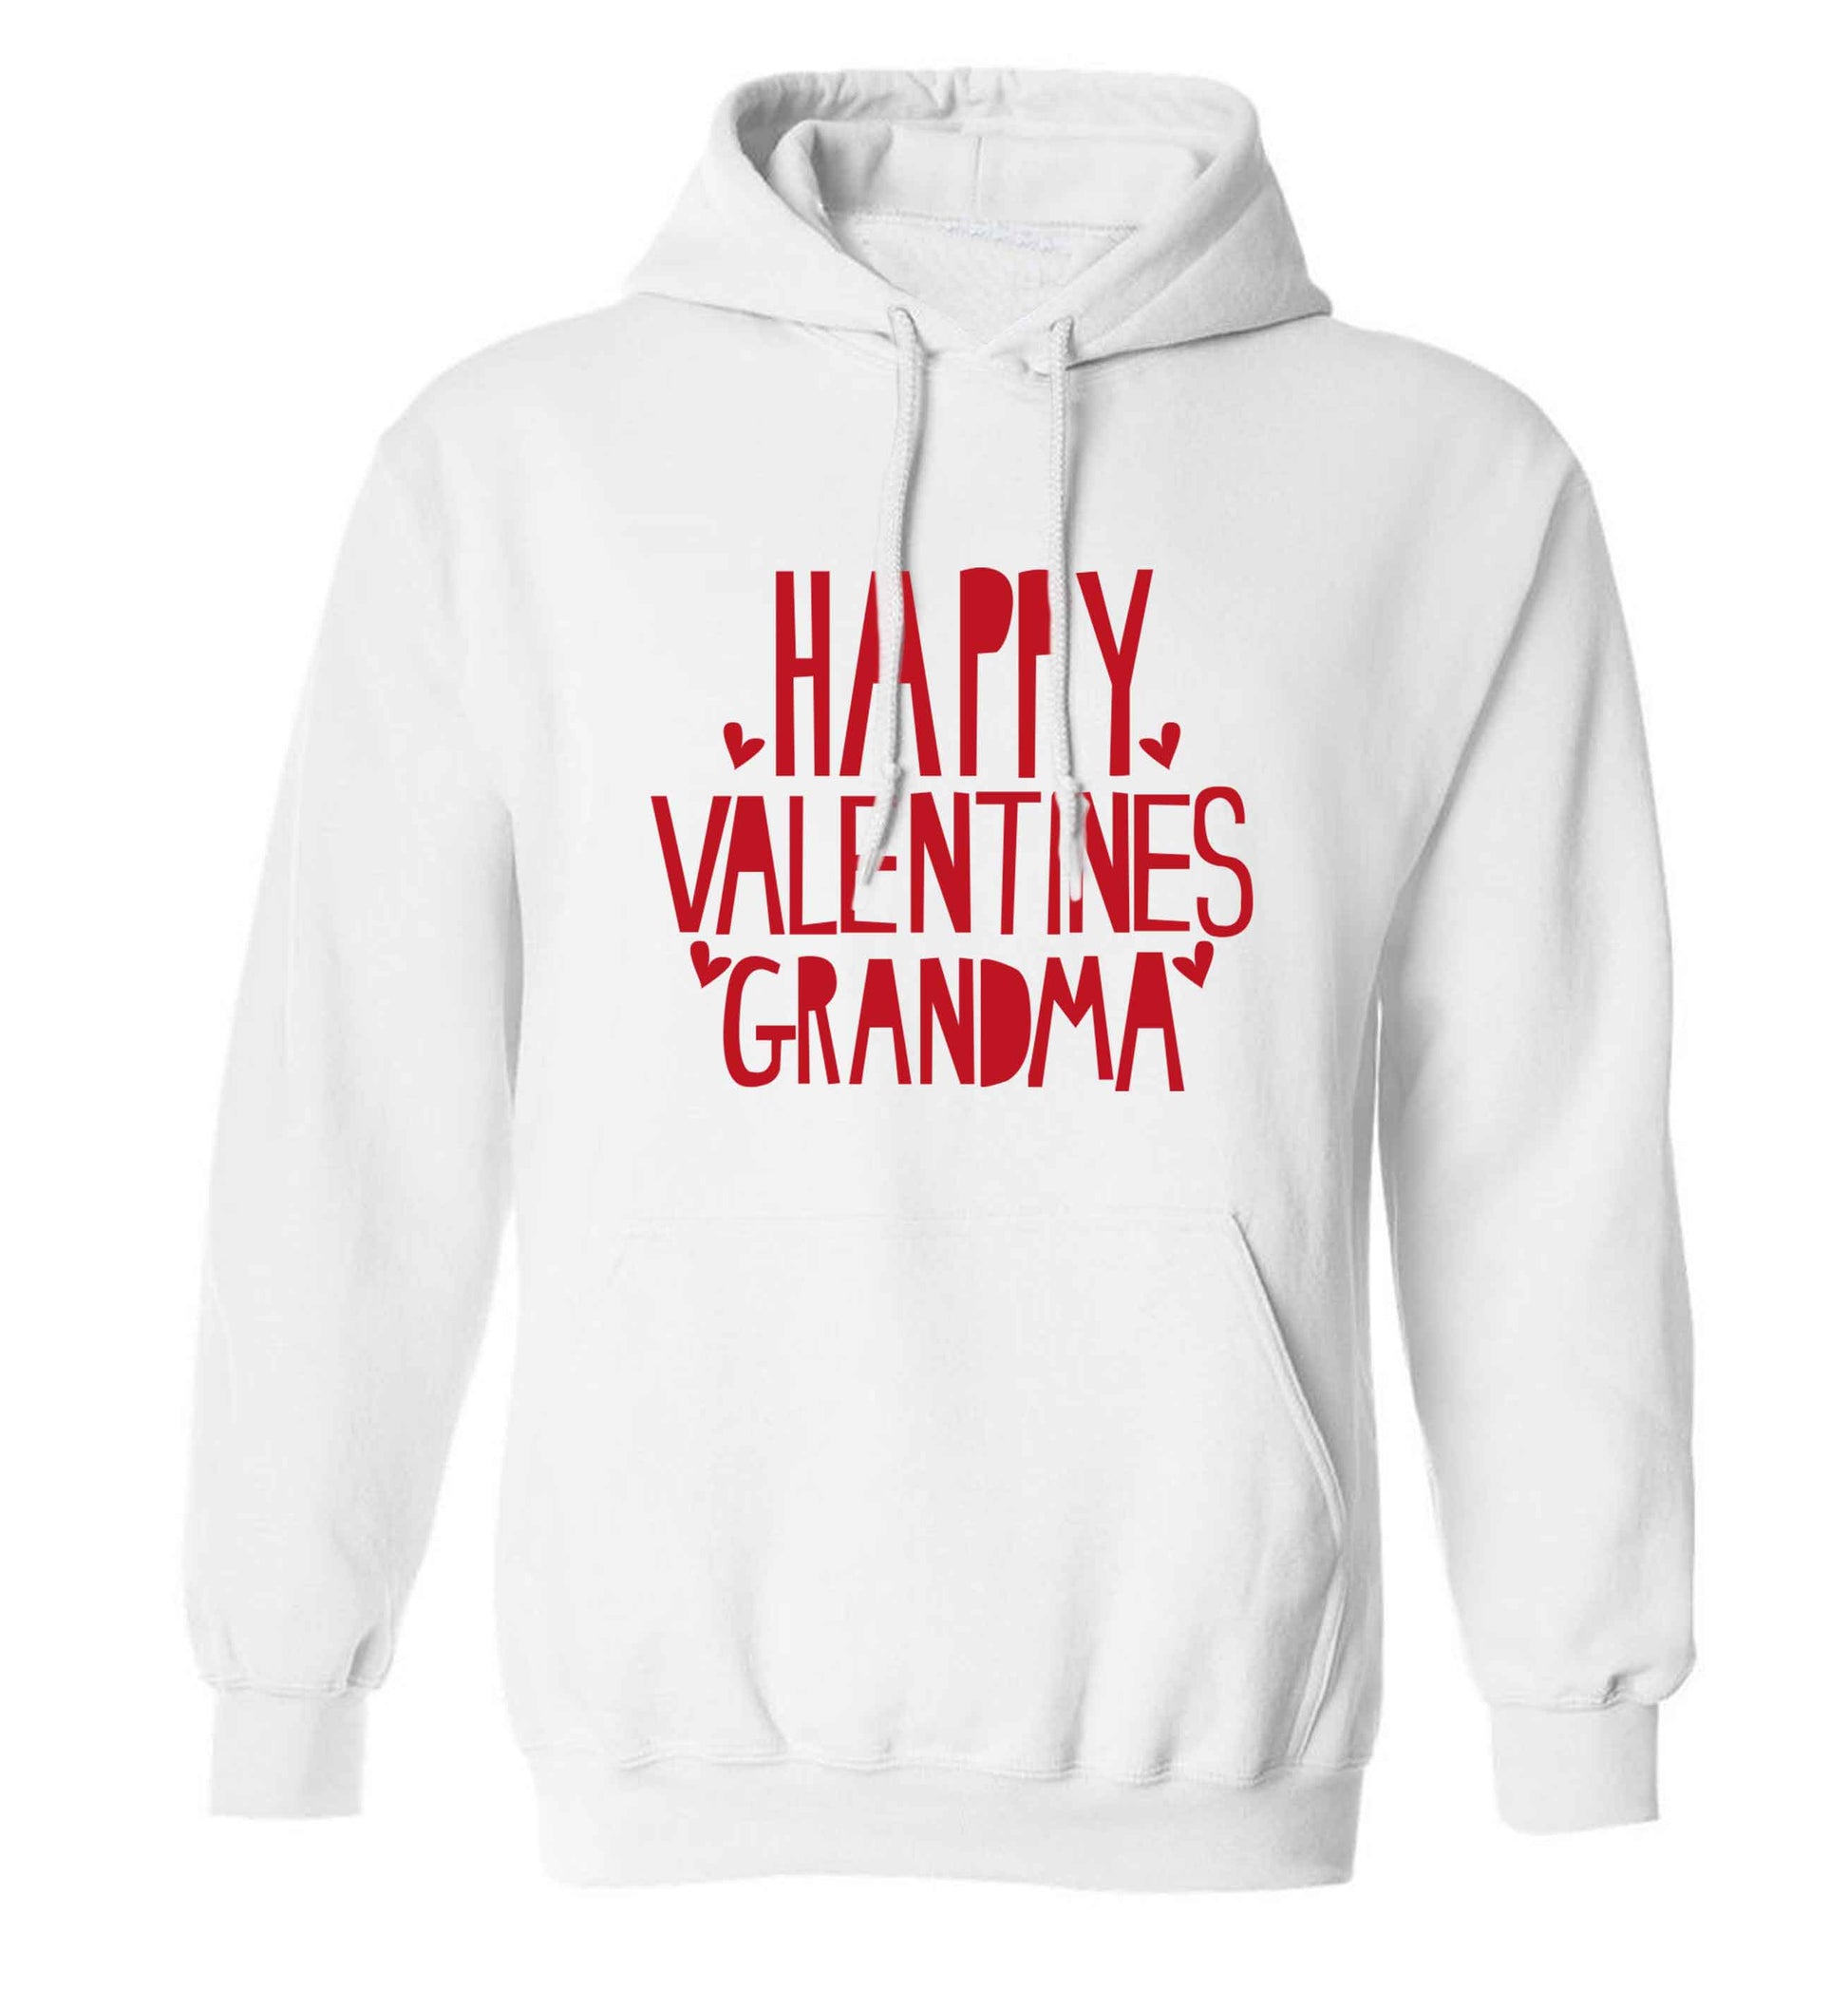 Happy valentines grandma adults unisex white hoodie 2XL